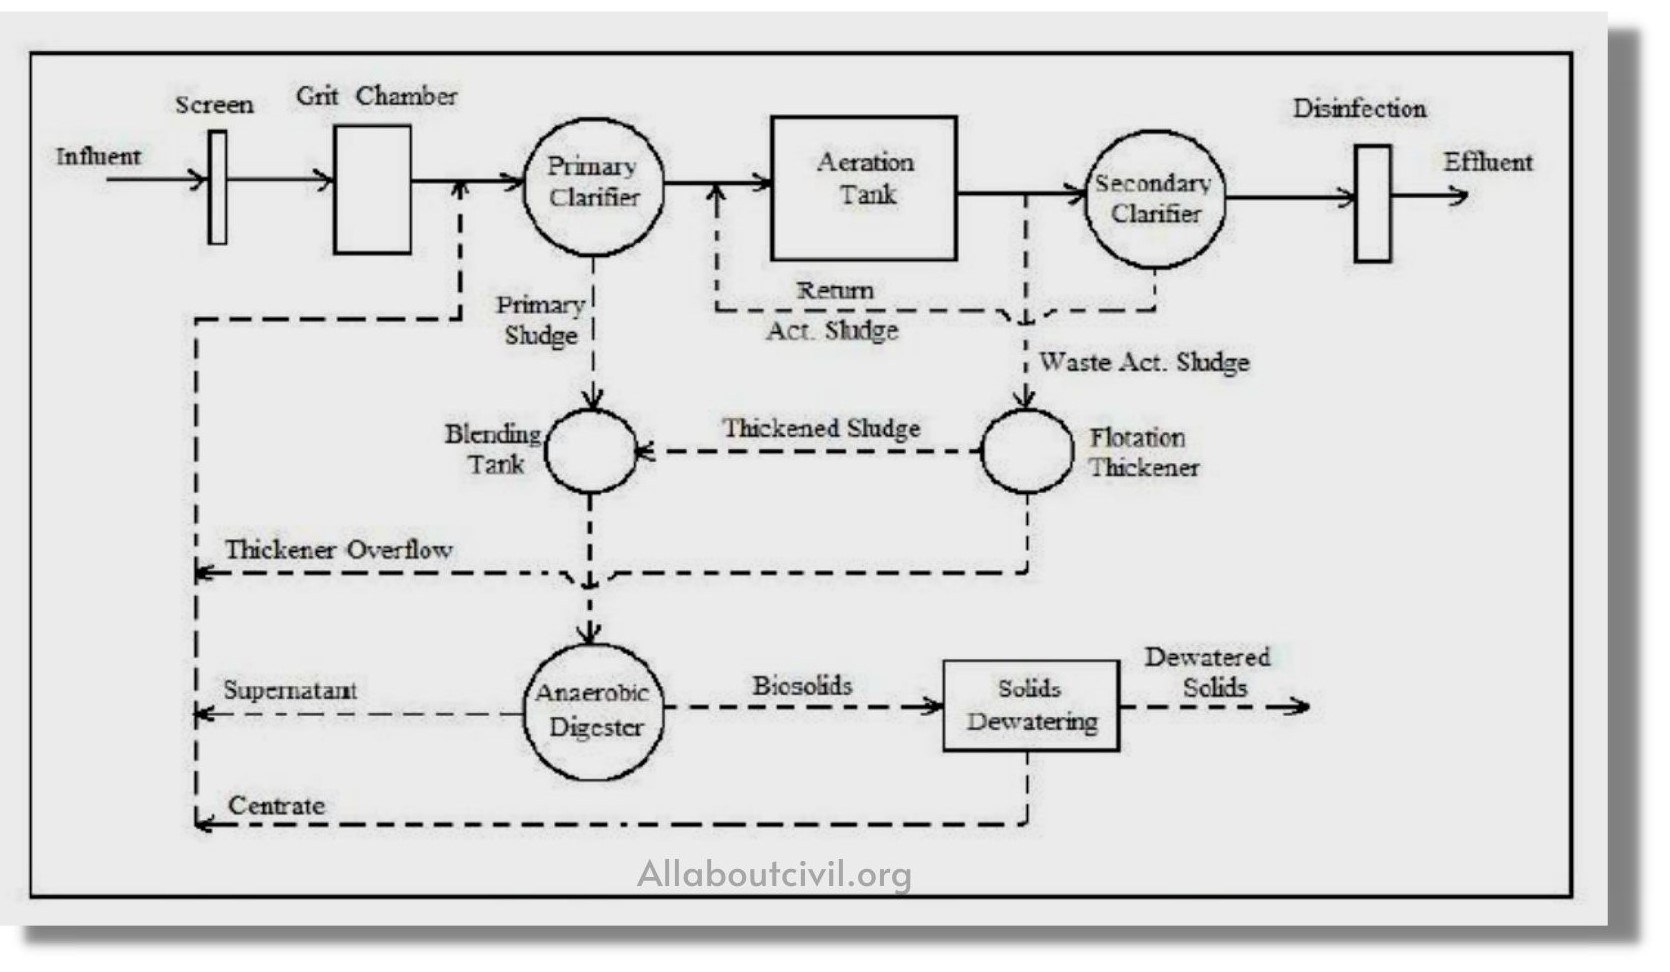 Flow diagram of Activated Sludge Process